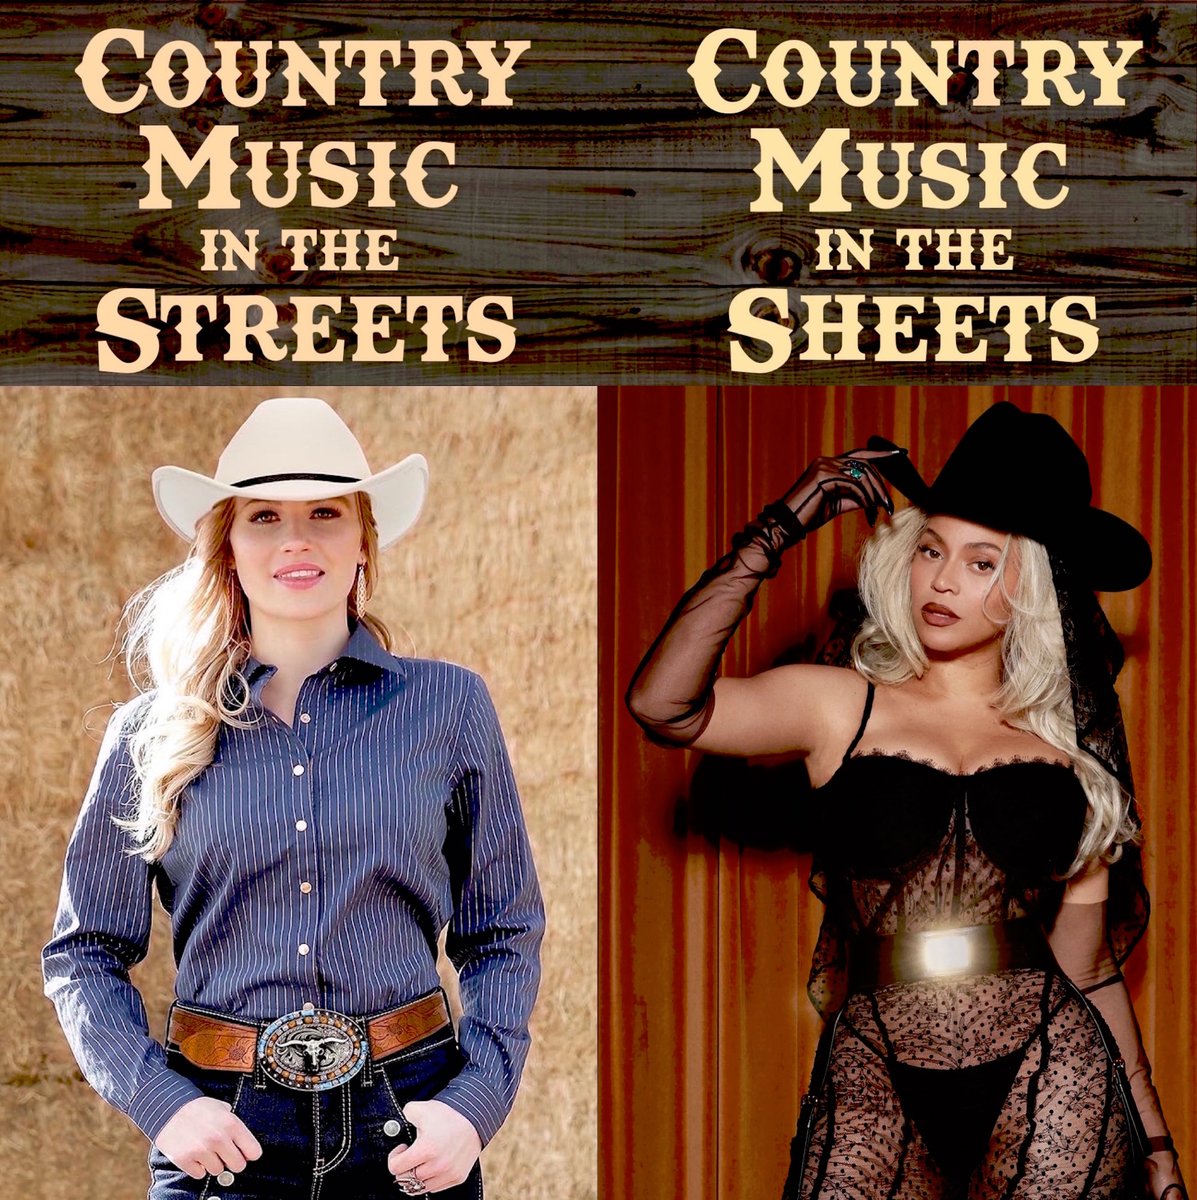 #beyoncecountrymusicmeme #countrymusicinthestreets #countrymusicinthesheets #meme #beyonce #cowboycarter #thisaintacountryalbum #jolene #texasholdem #beyoncememe #yaya